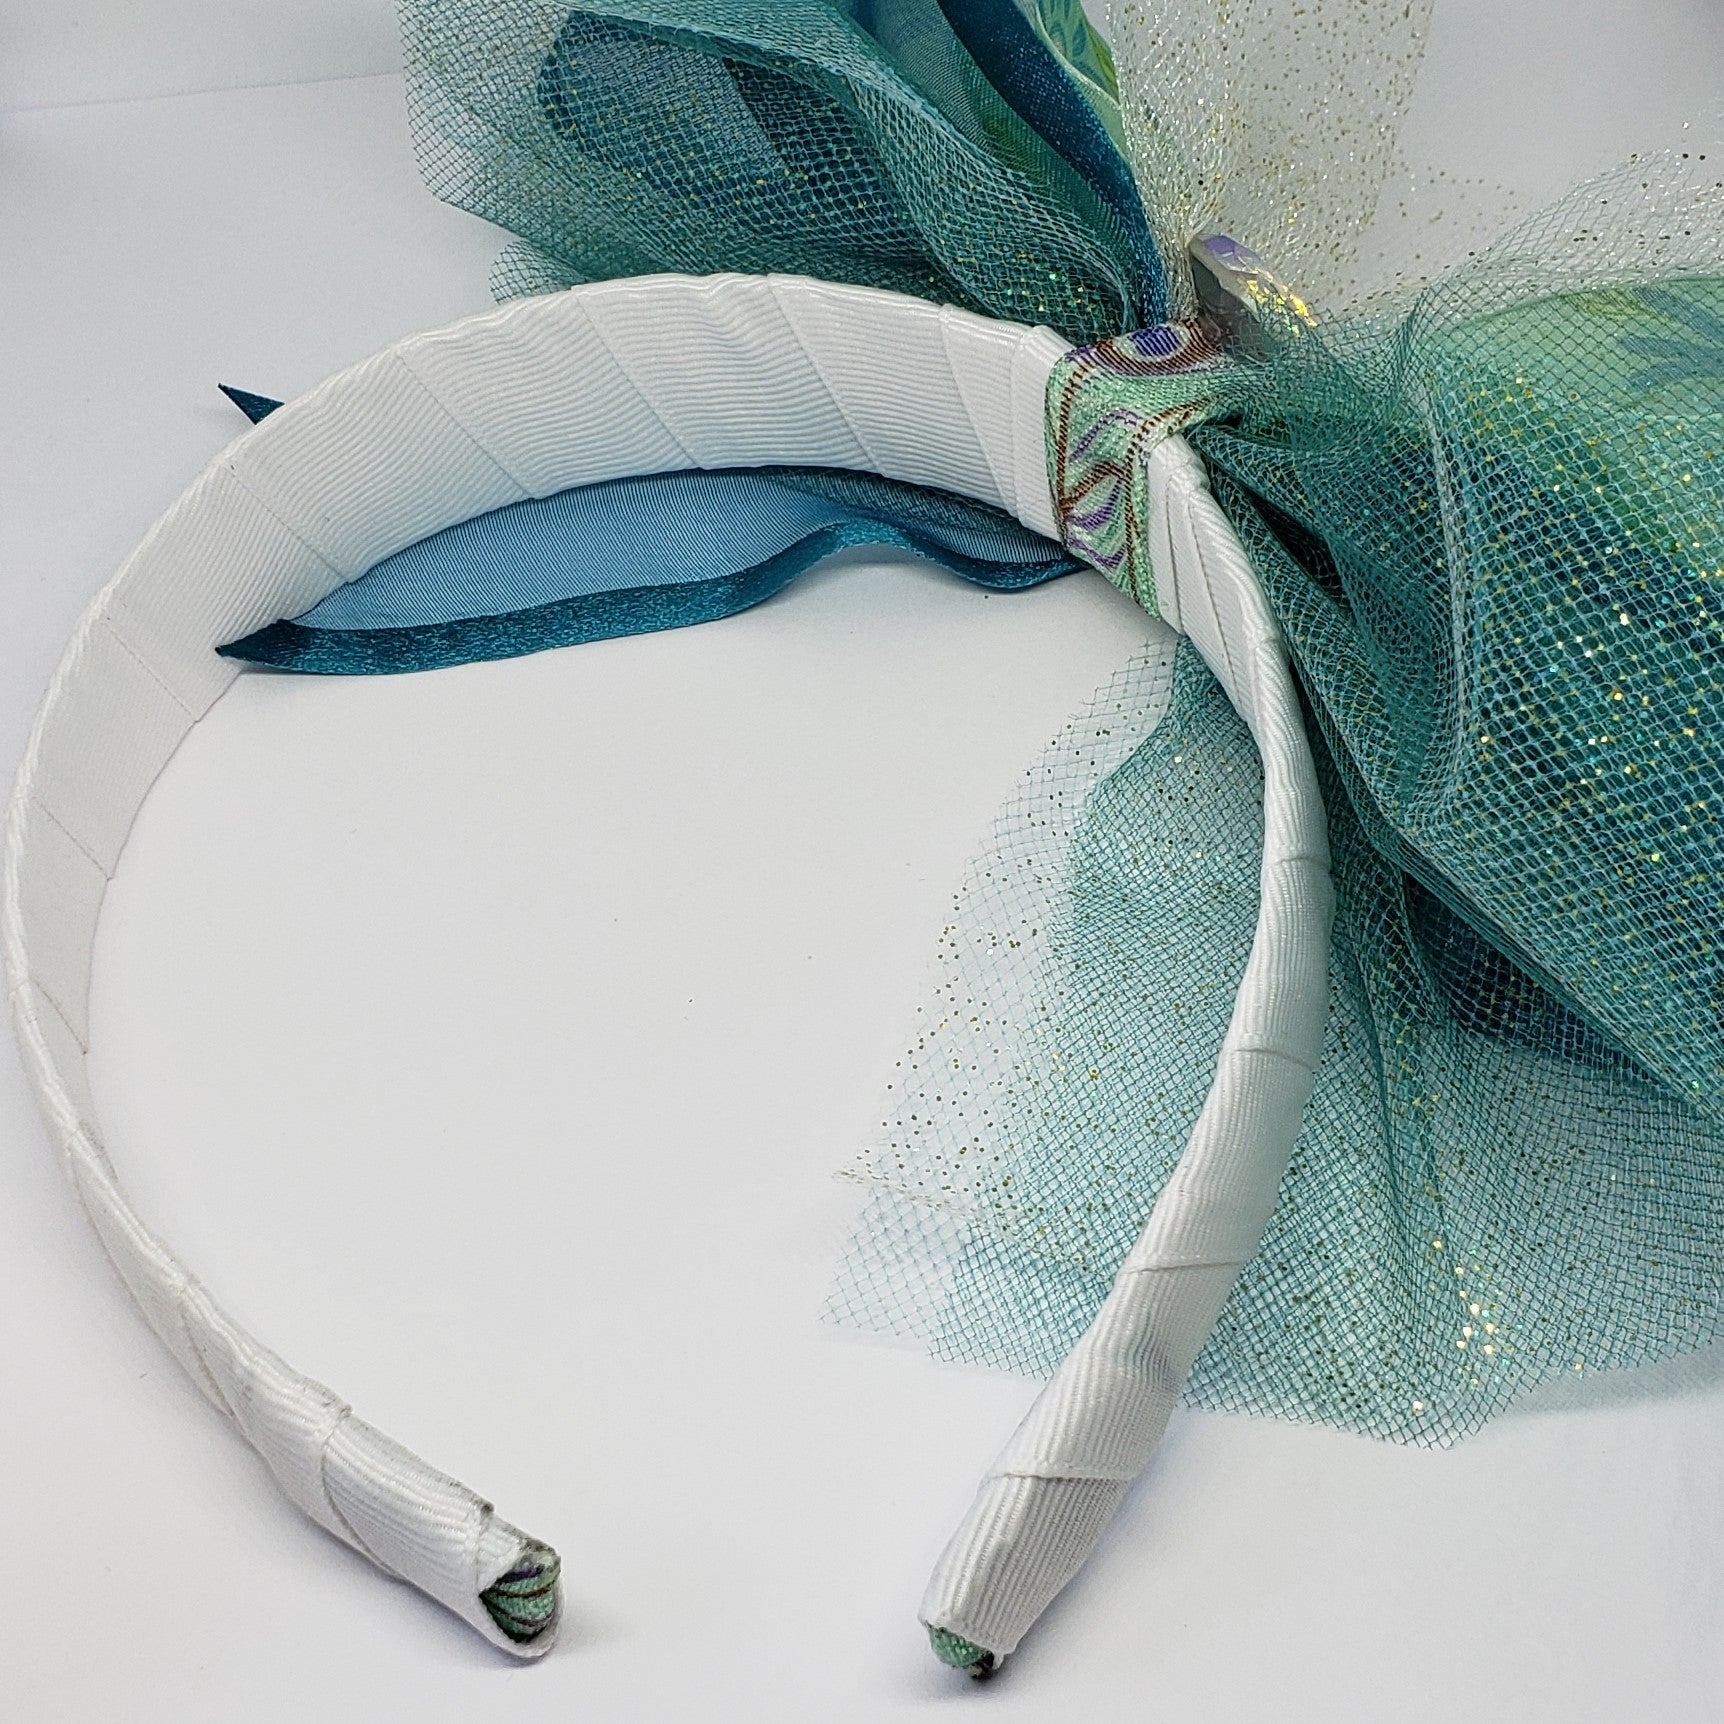 N-Zala Swarovski Peacock Ribbons & Tulle Headband in Teal Green & White - Houzz of DVA Boutique